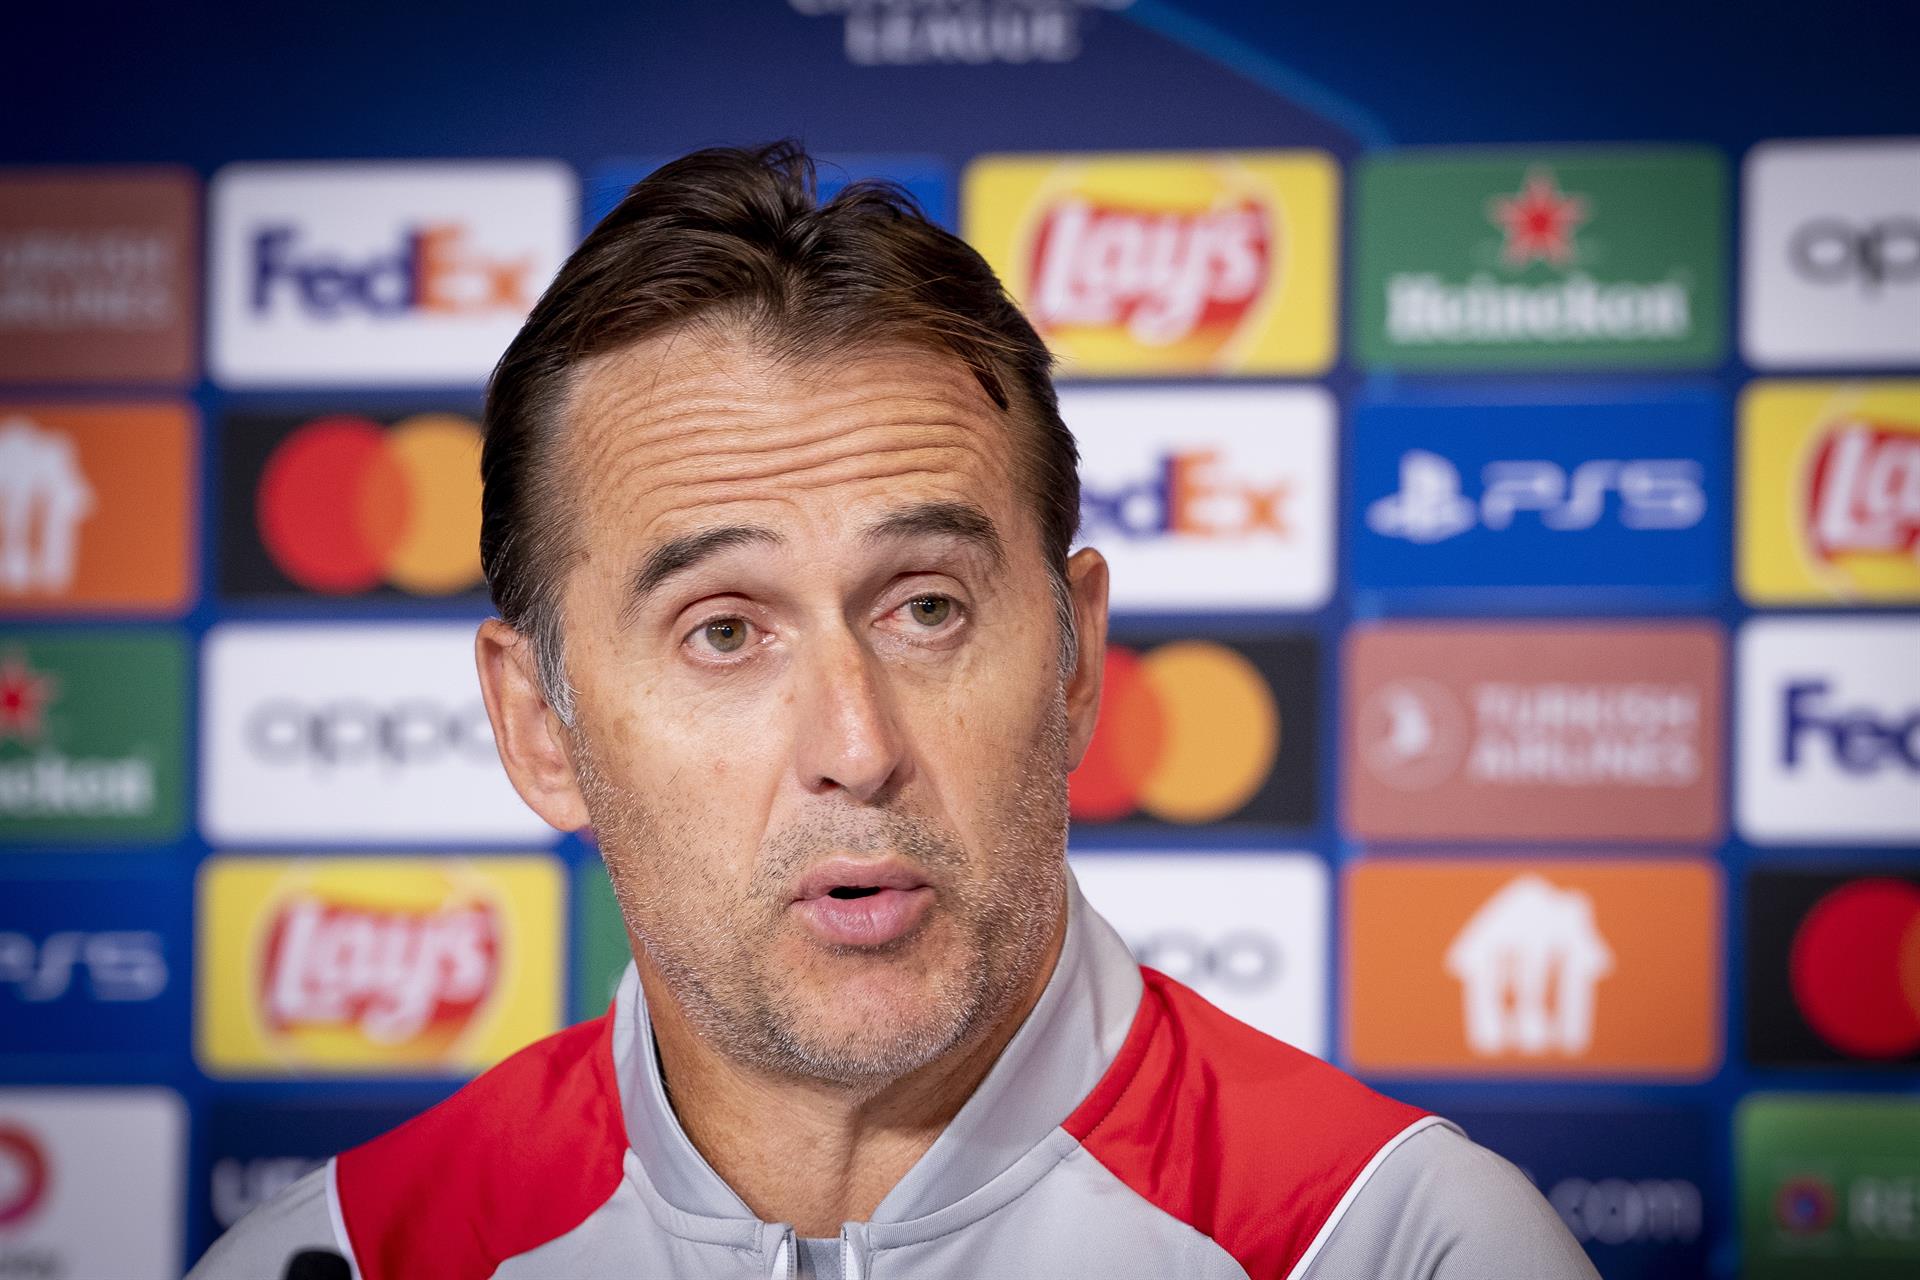 El entrenador del Sevilla, Julen Lopetegui, en la sala de prensa del Parken Stadium de Copenhage. EFE/Liselotte Sabroe